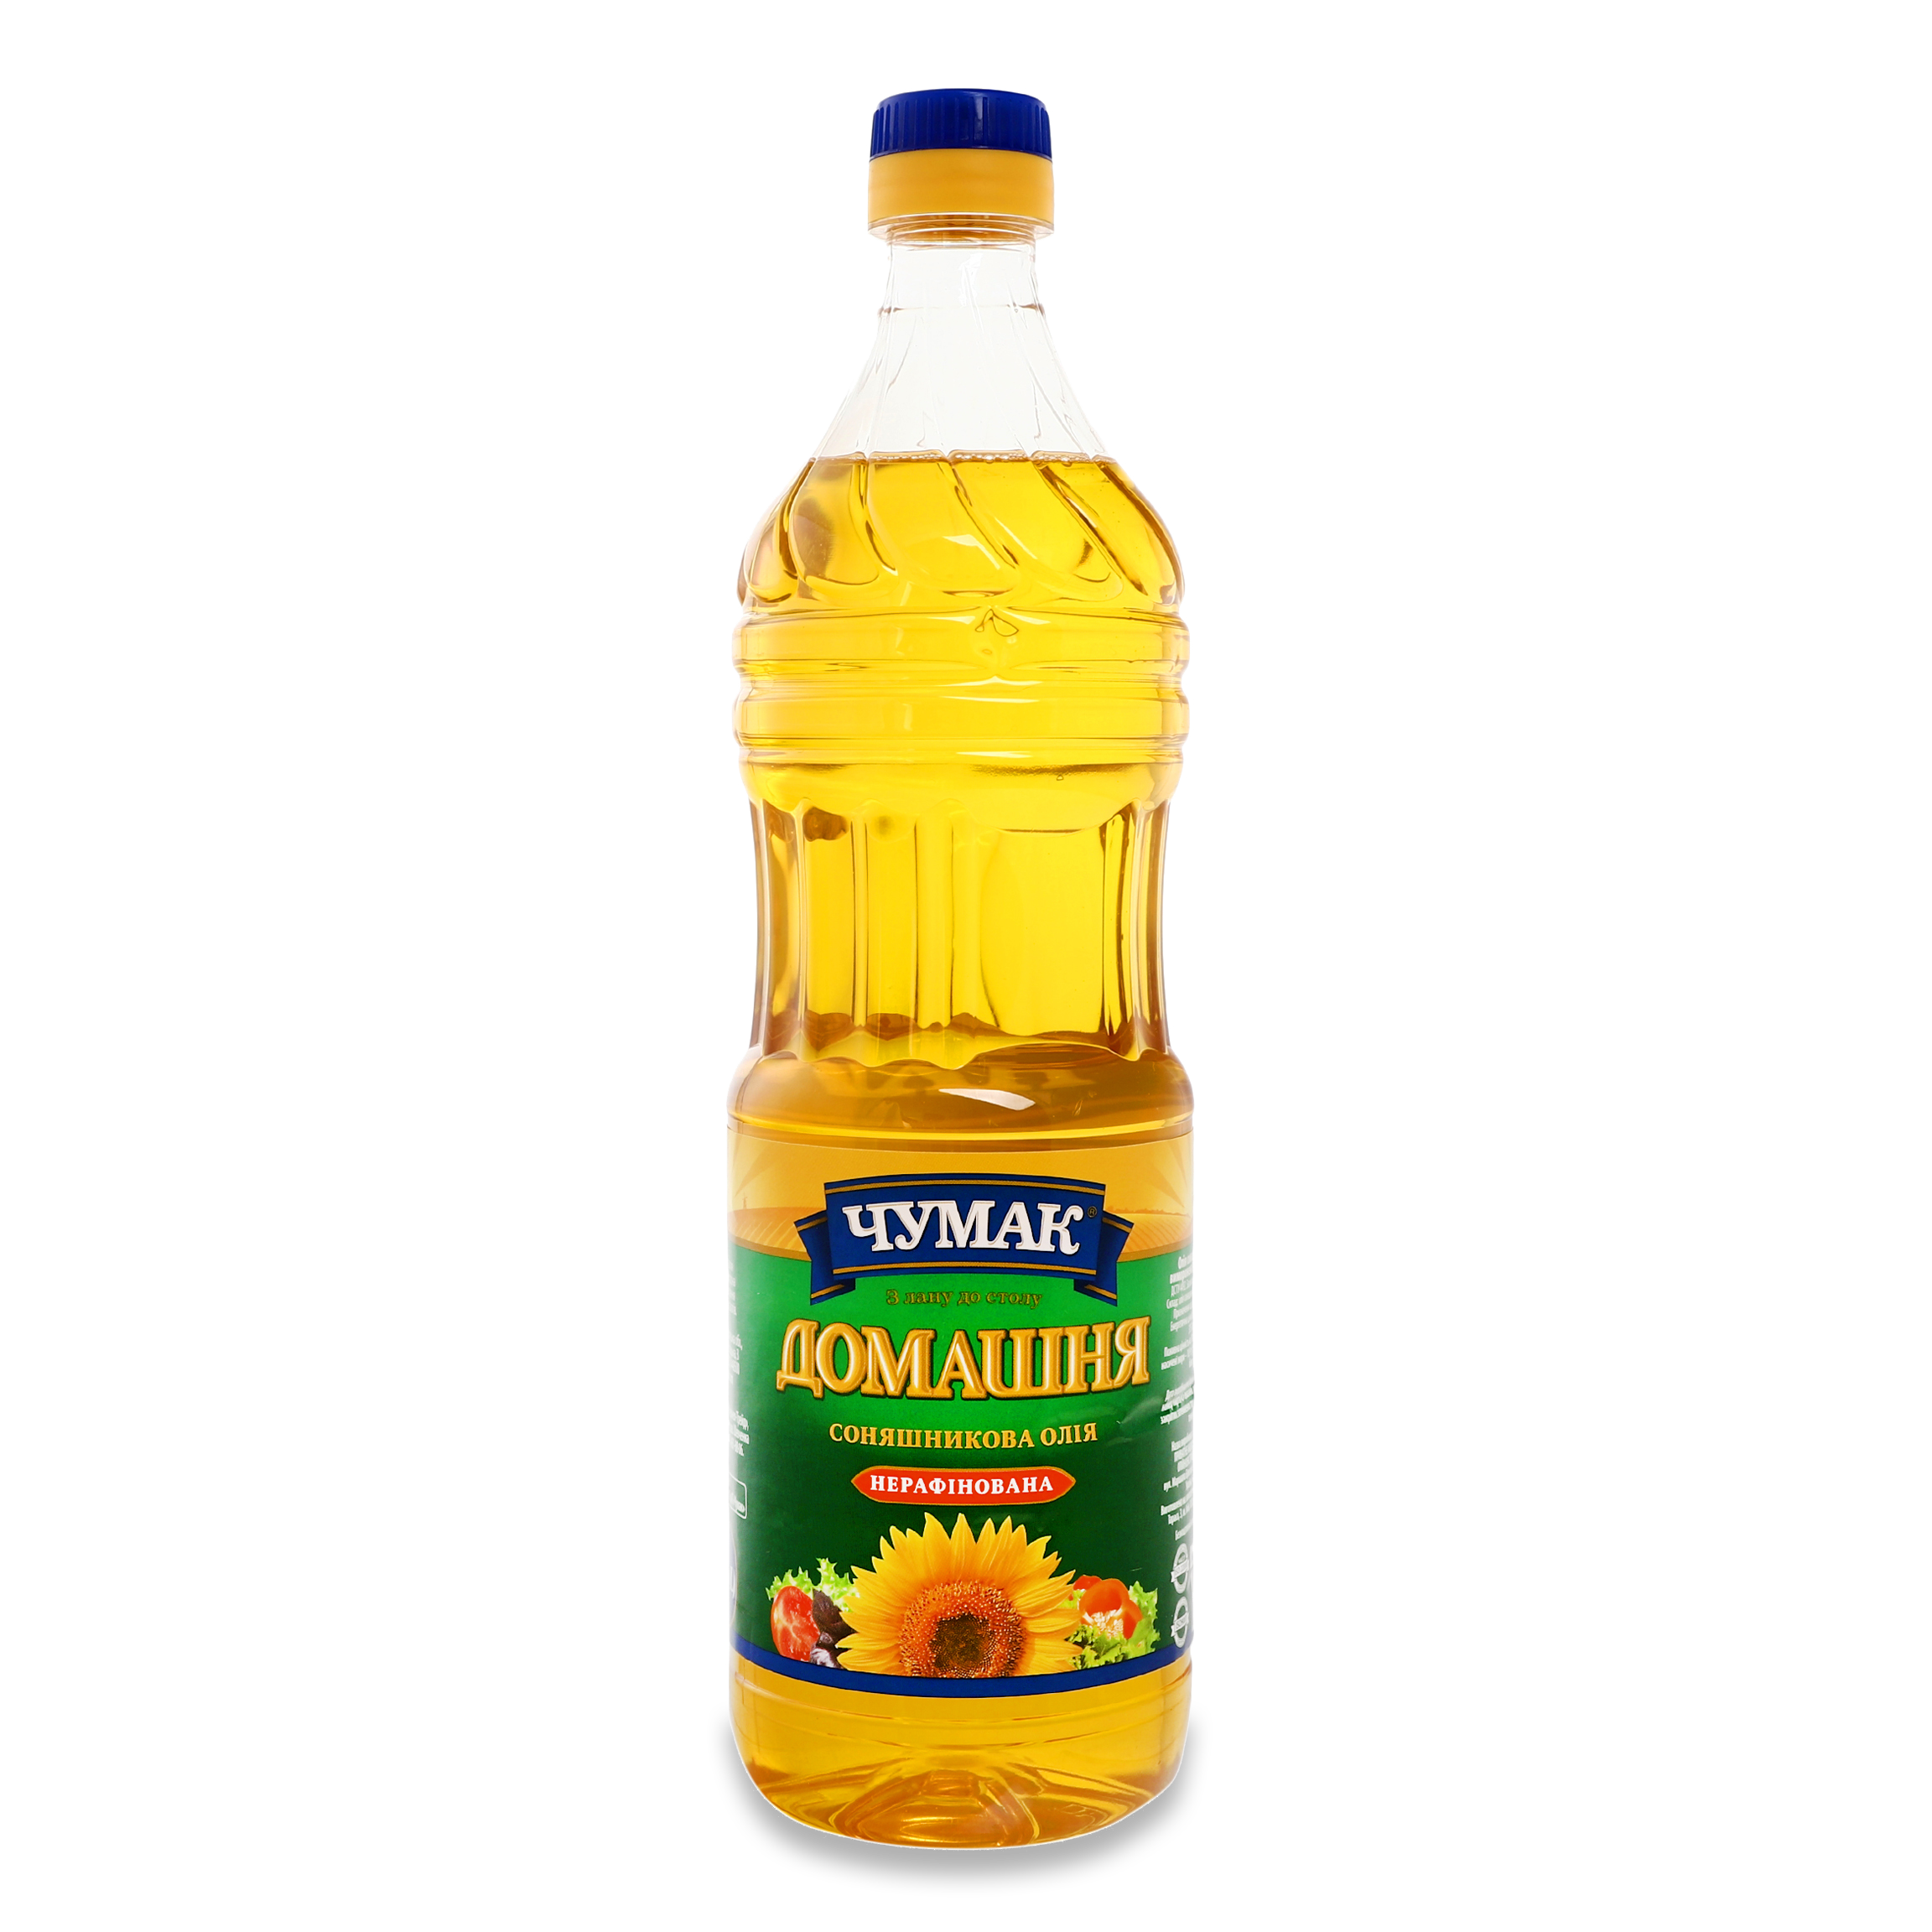 Chumak Homemade Unrefined Sunflower Oil 900ml